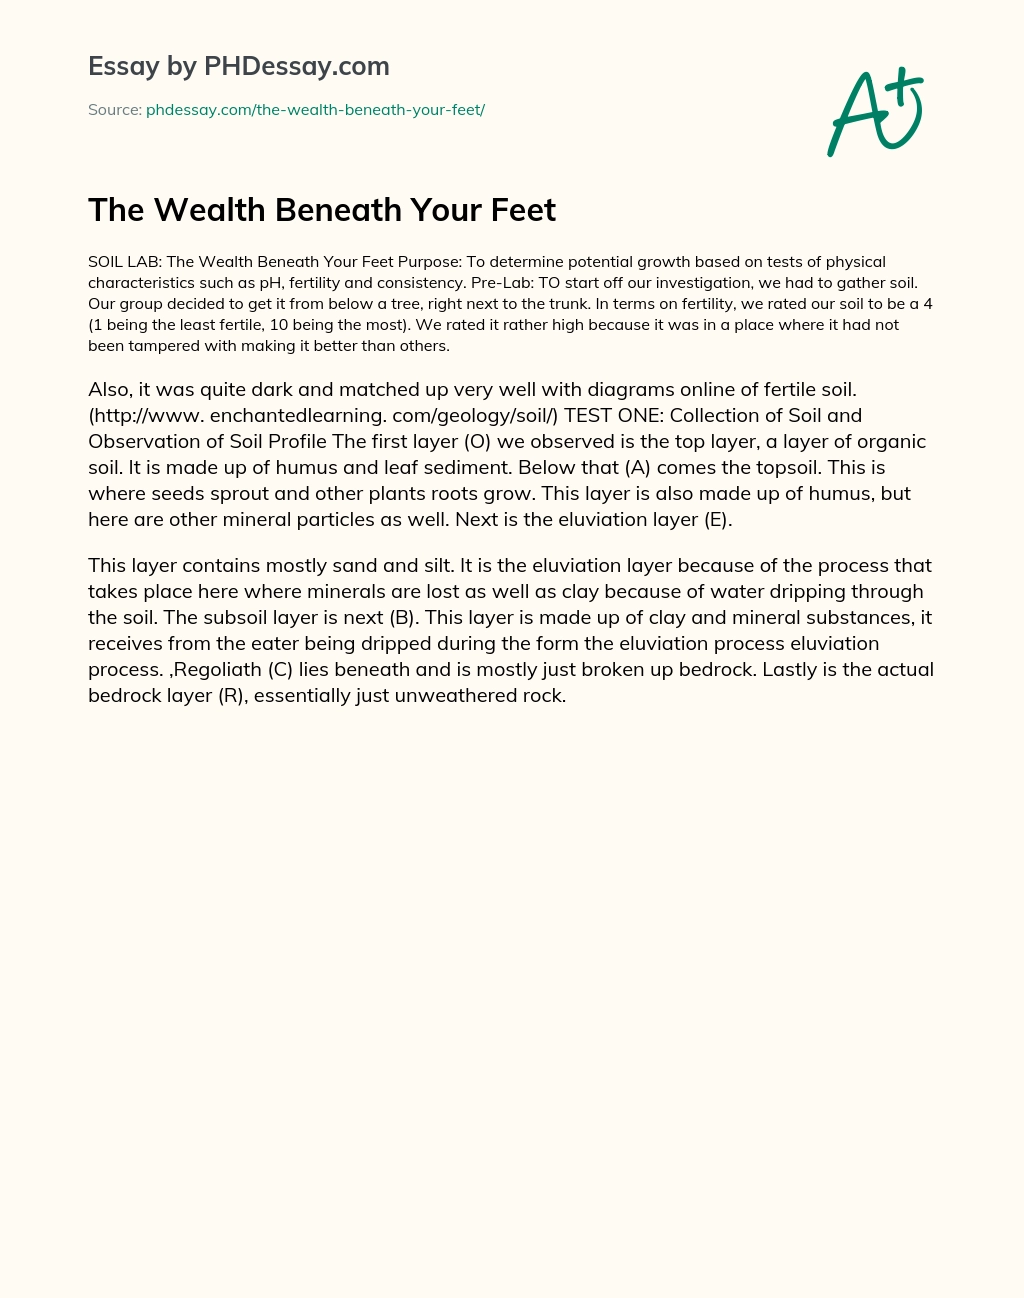 The Wealth Beneath Your Feet essay